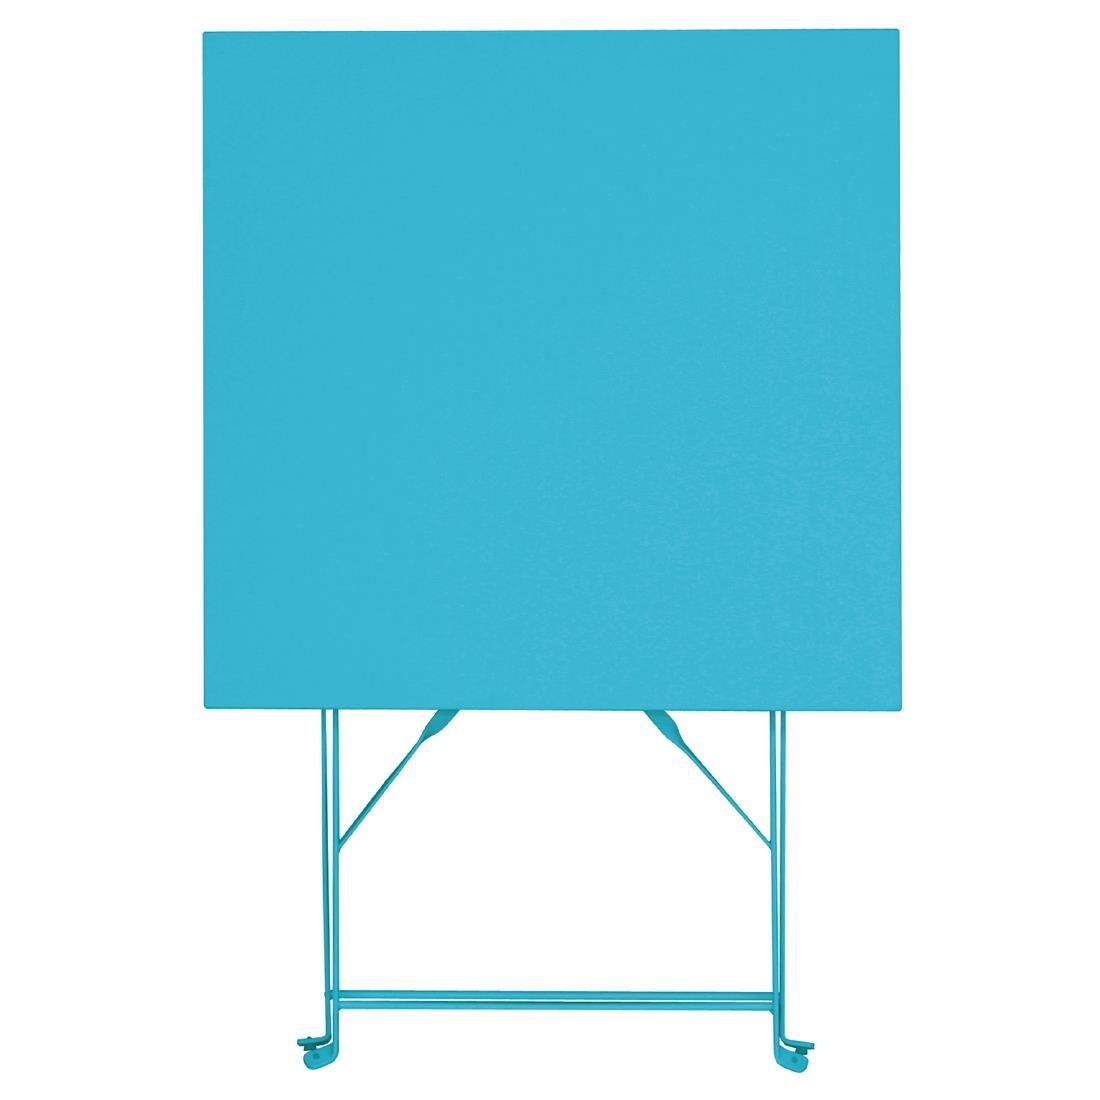 Bolero Pavement Style Square Steel Table Seaside Blue 600mm - GK985  - 2